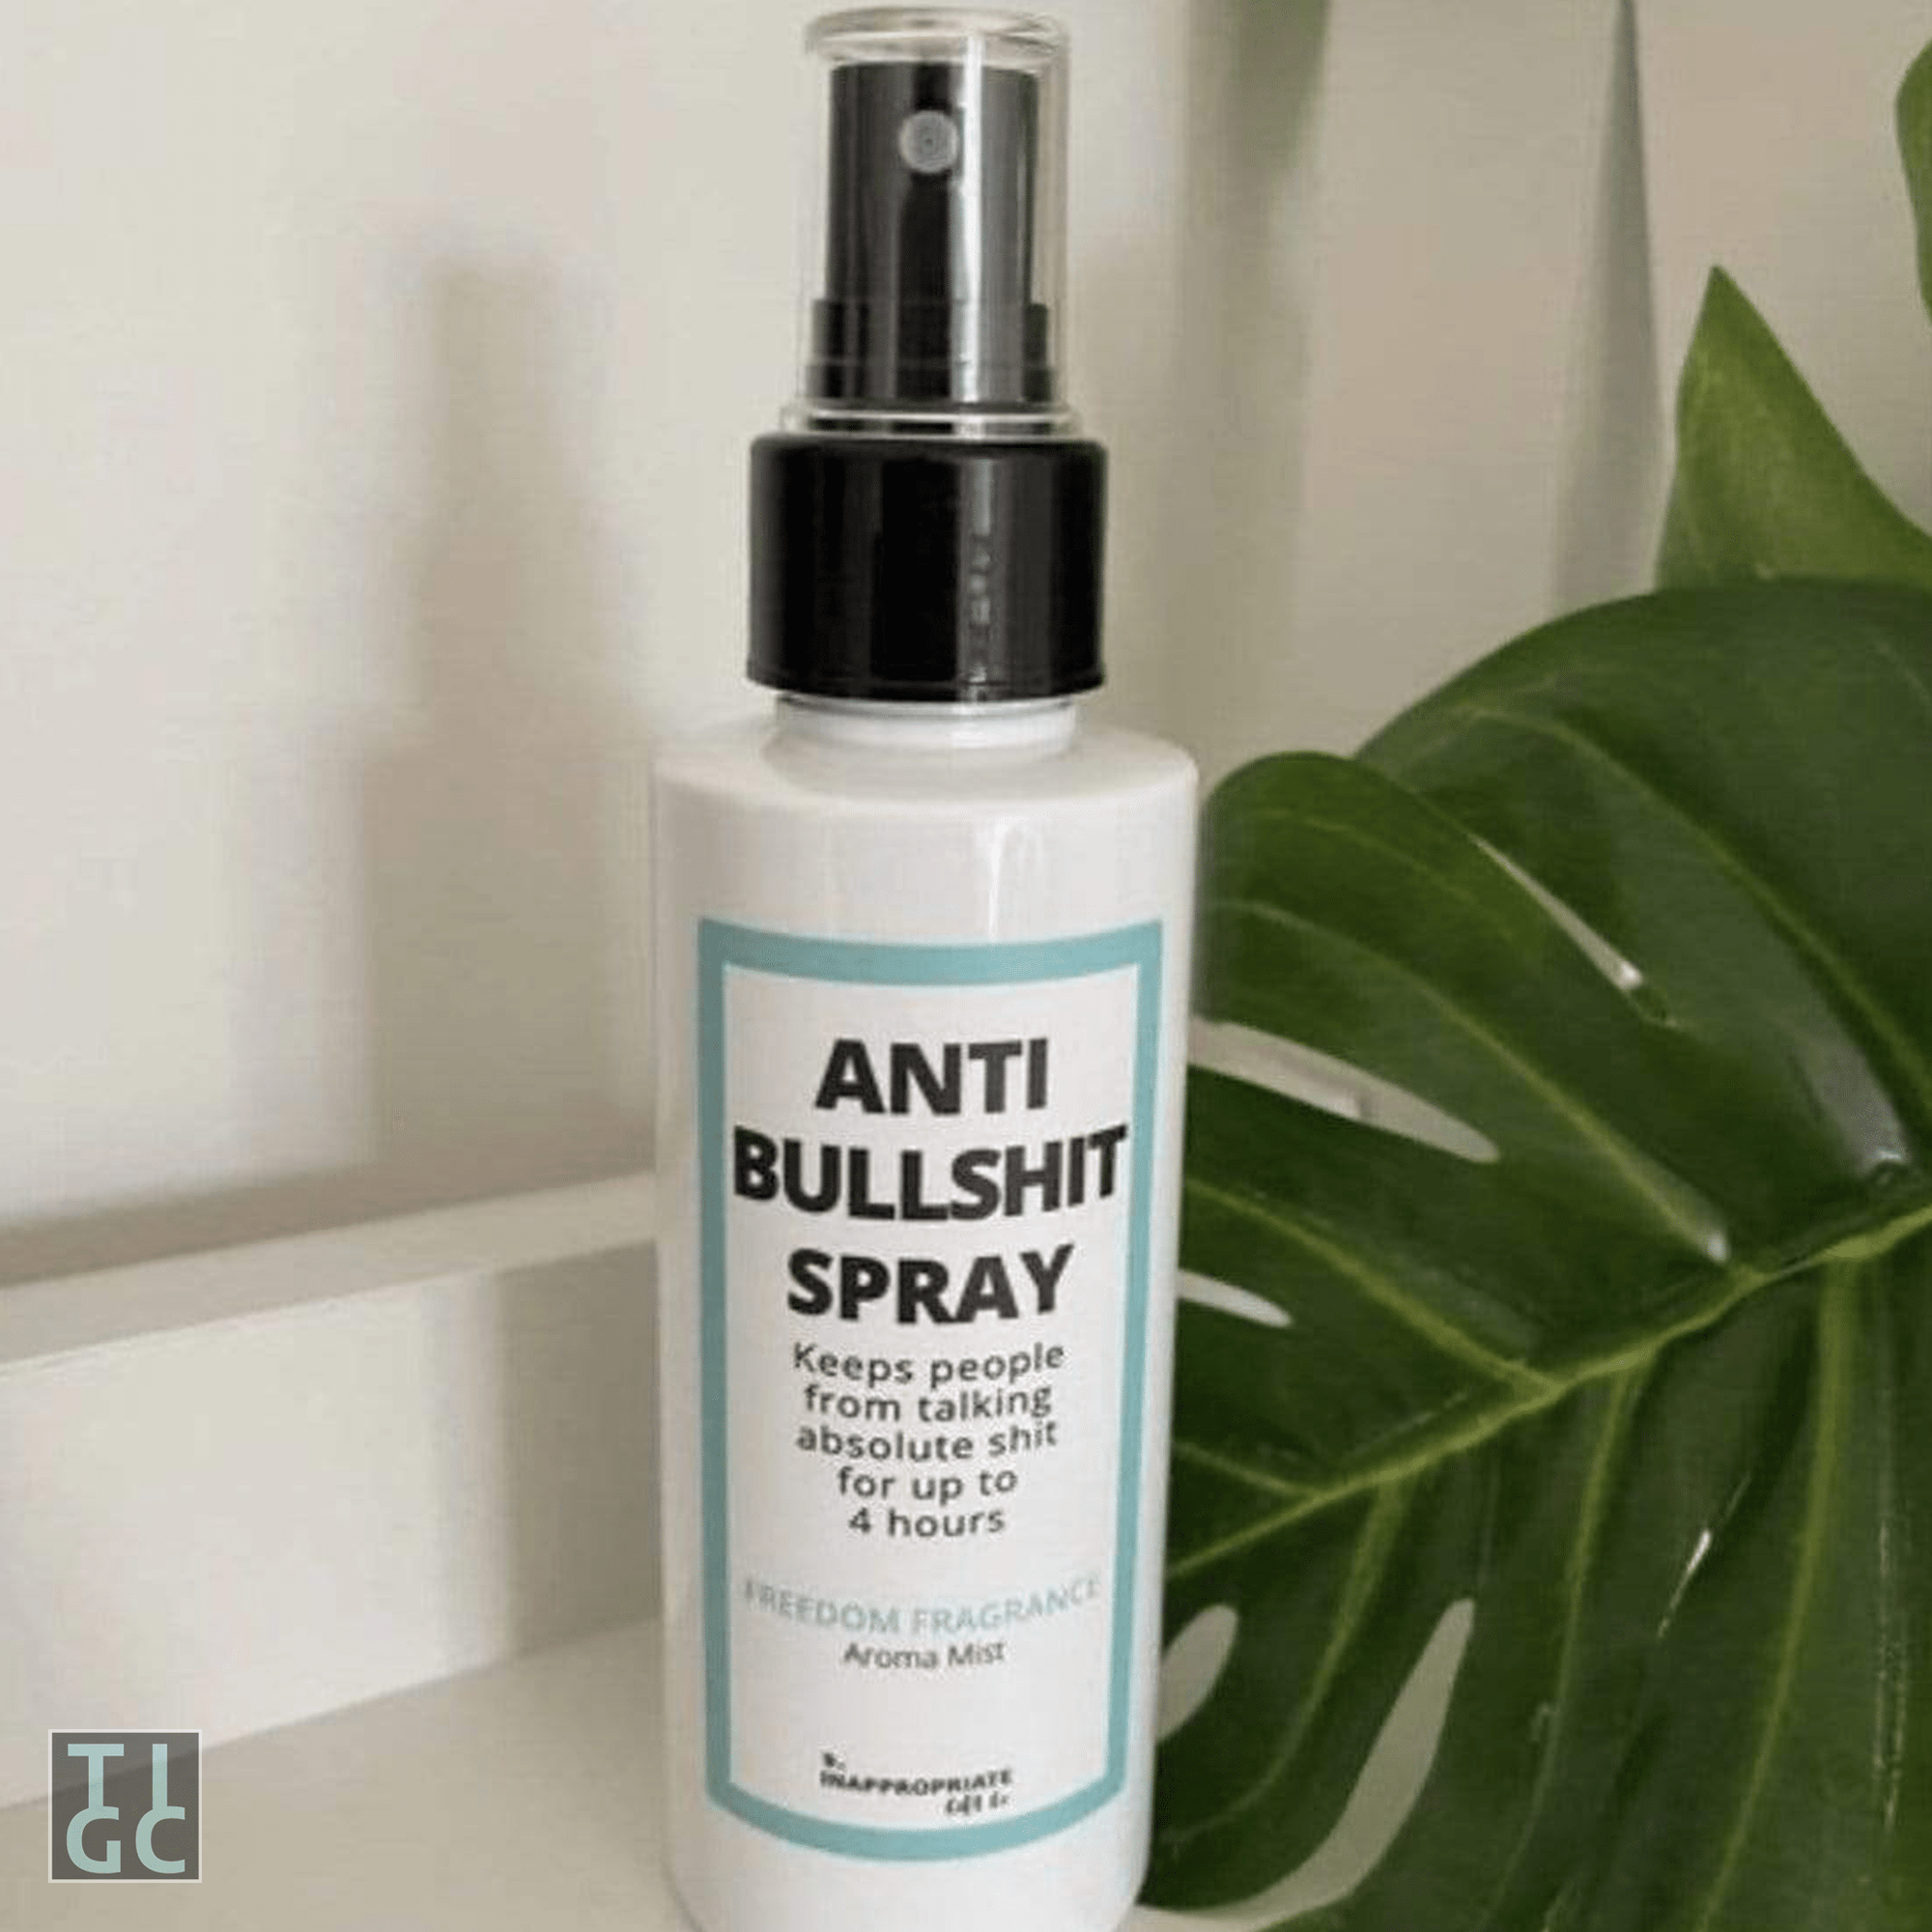 TIGC The Inappropriate Gift Co Anti Bullshit Spray